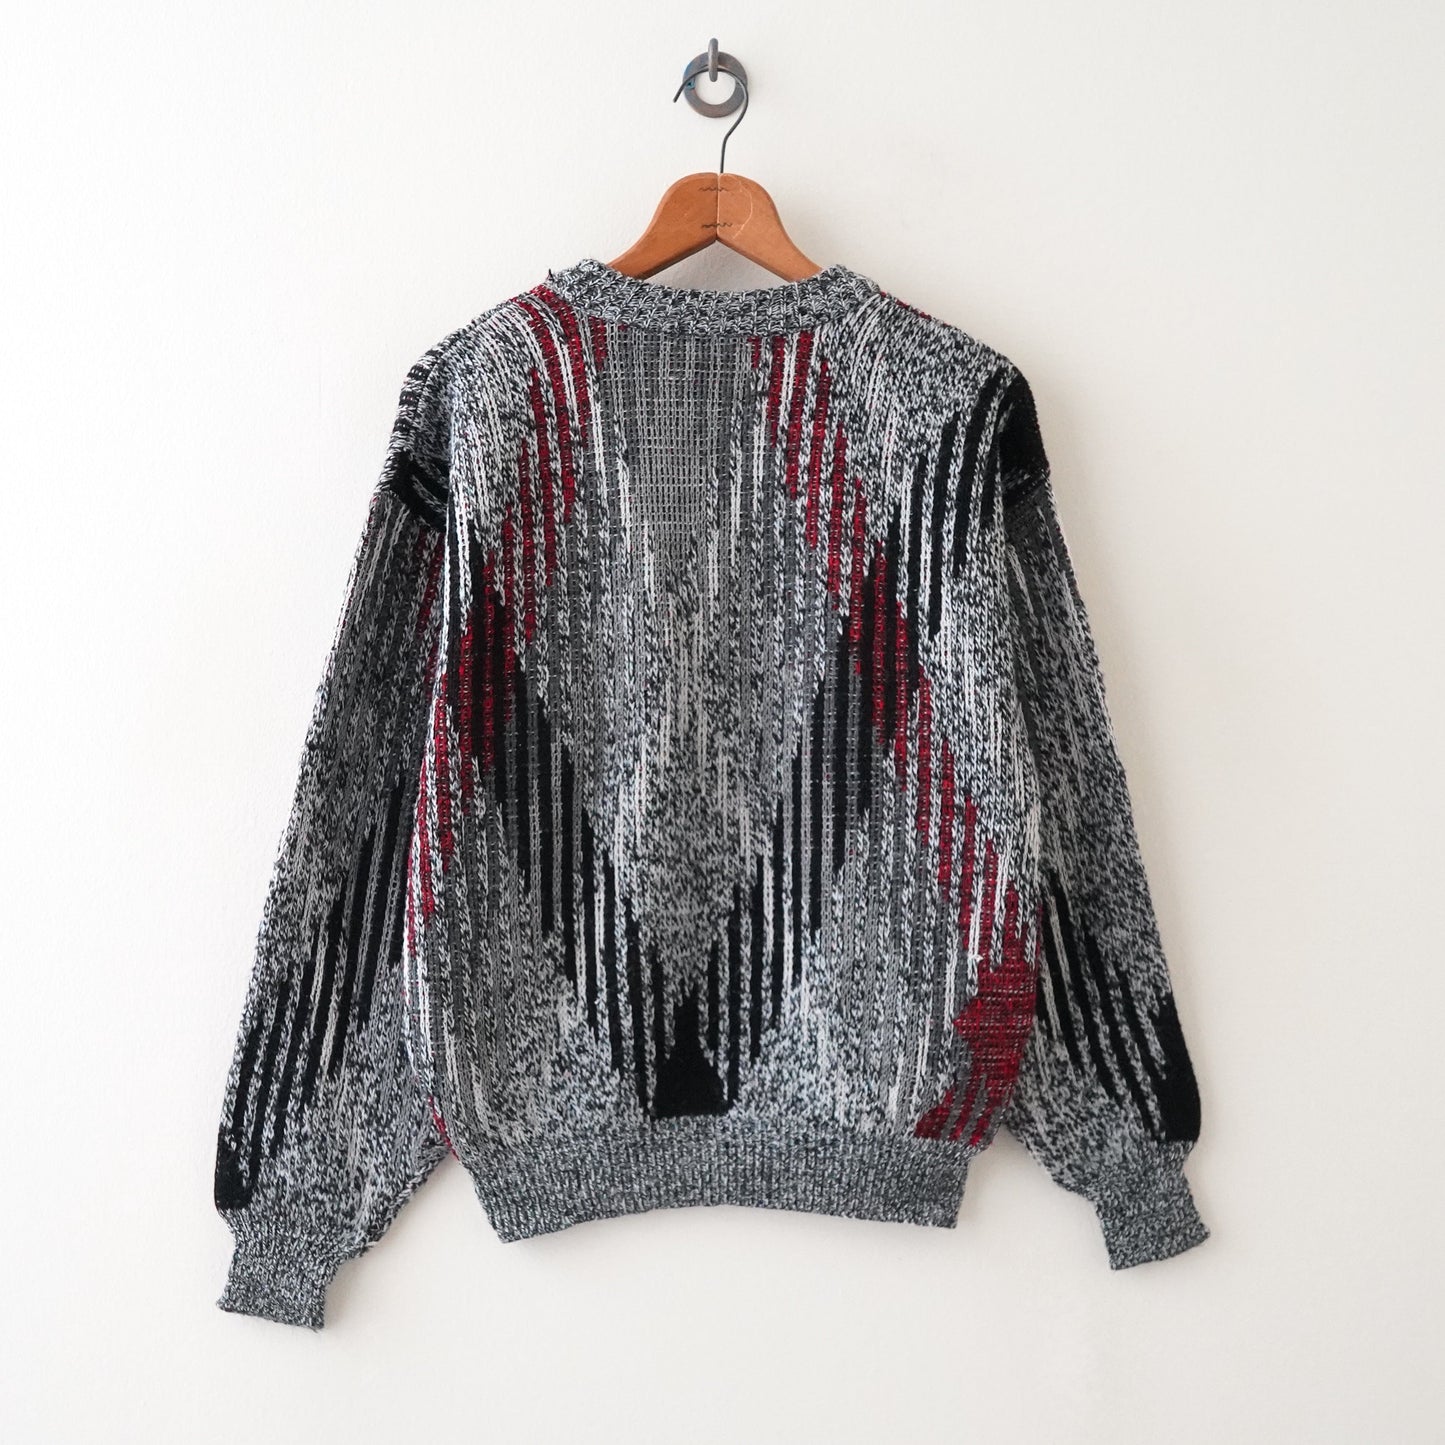 Acryl knit